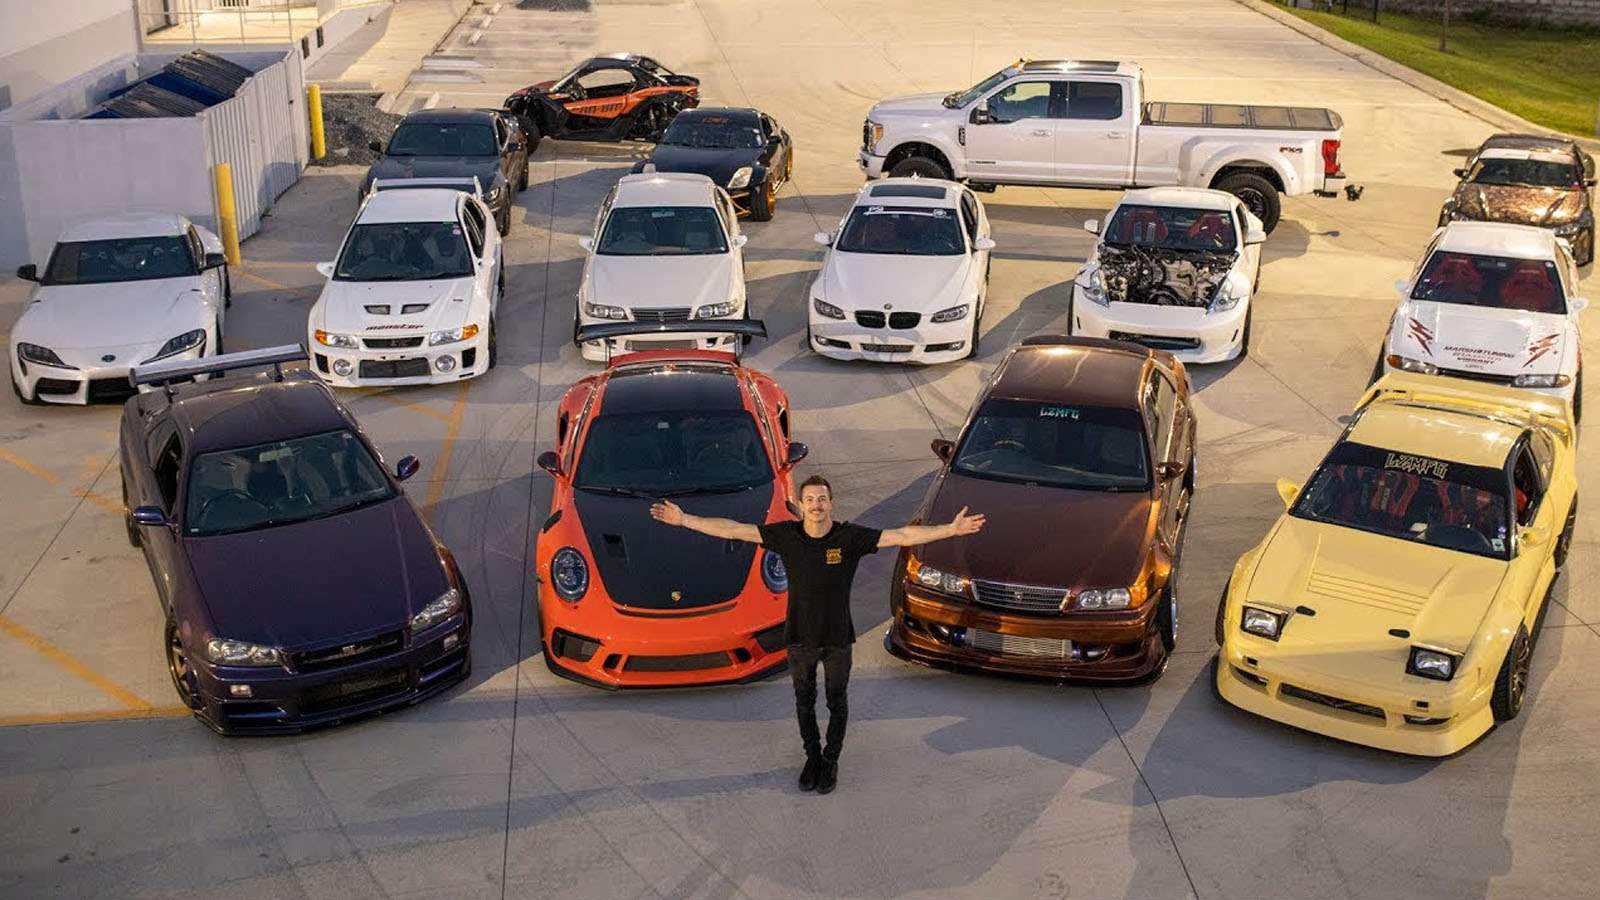 AdamLZ Car Collection